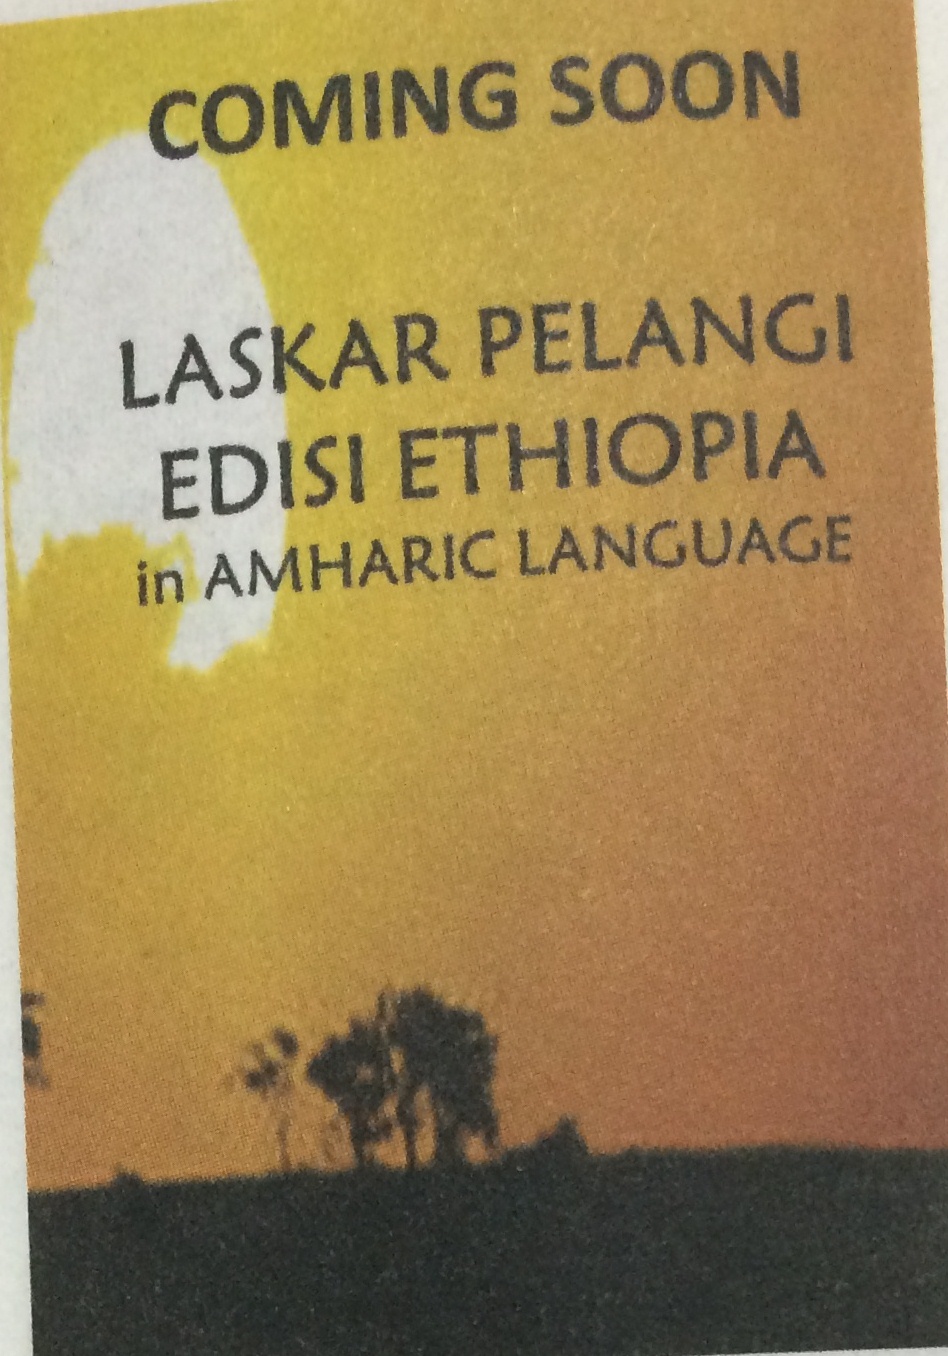 Dicetak dalam 26 bahasa, begini tampilan novel Laskar Pelangi